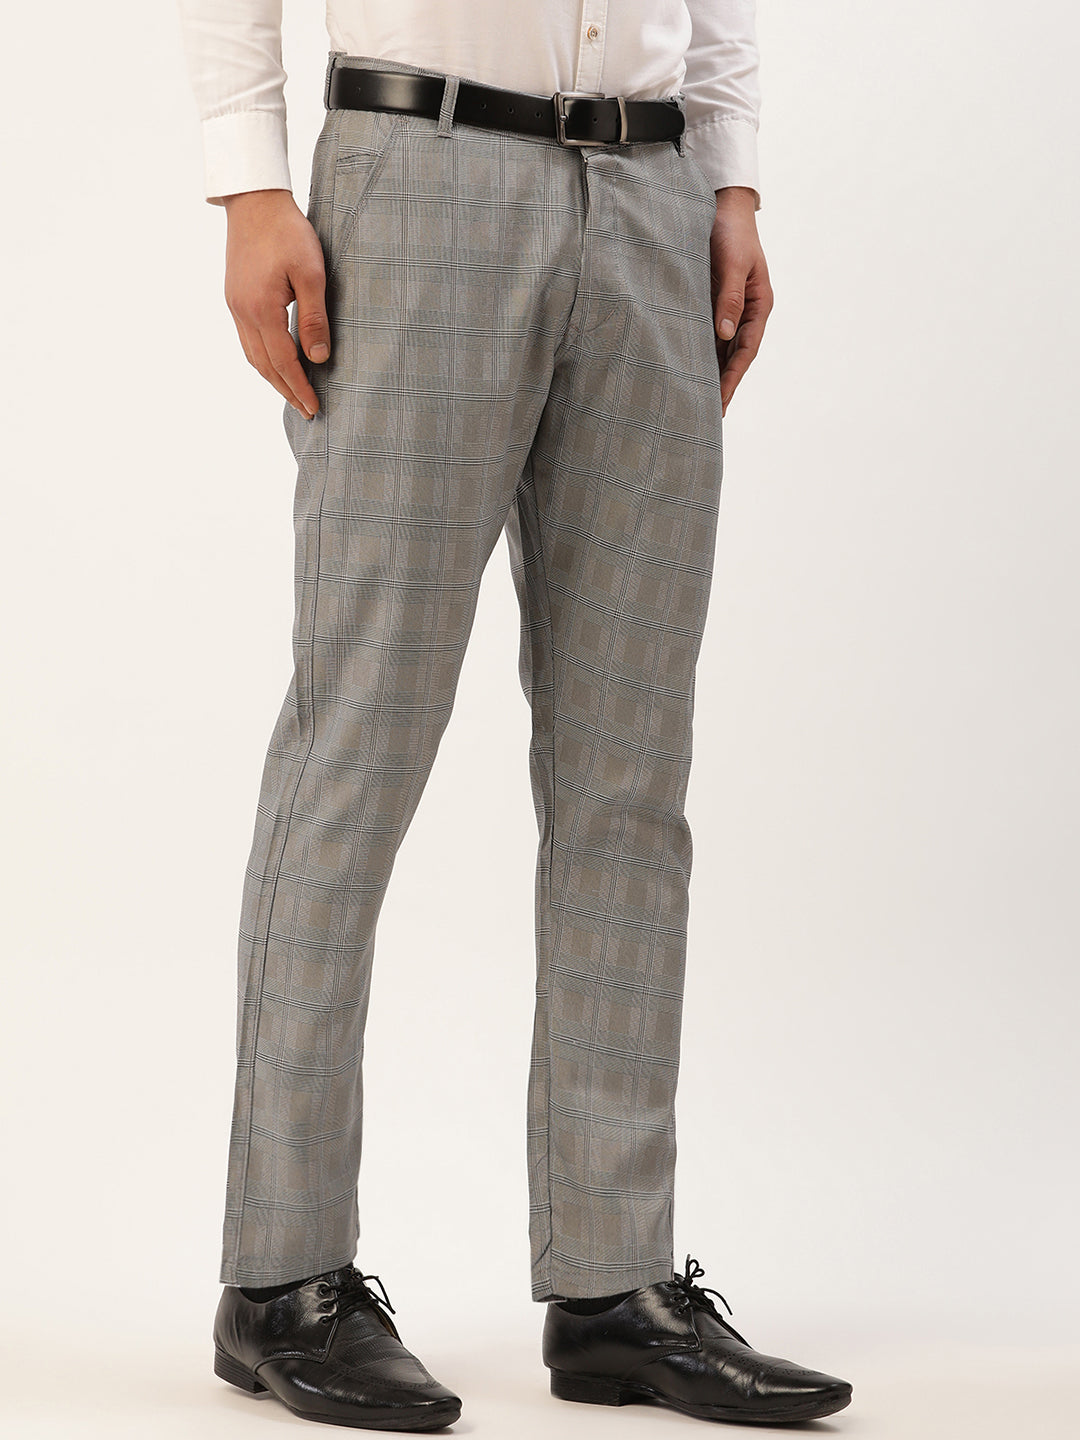 Jainish Men's Grey Window Checked Formal Trousers